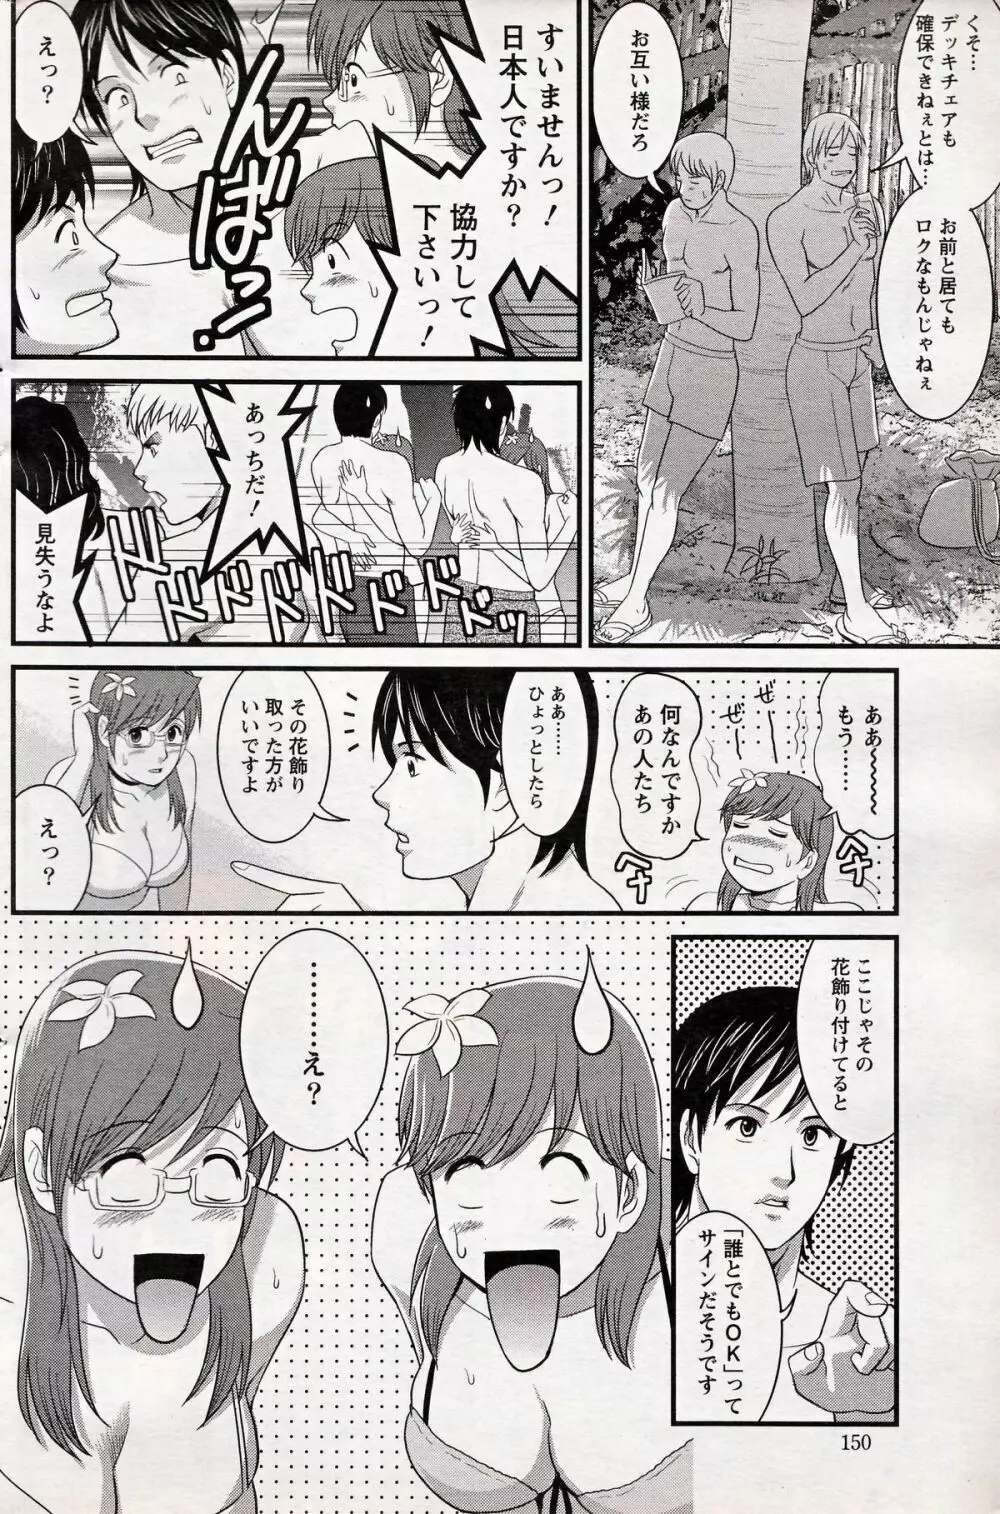 Haken no Muuko-san 16 12ページ